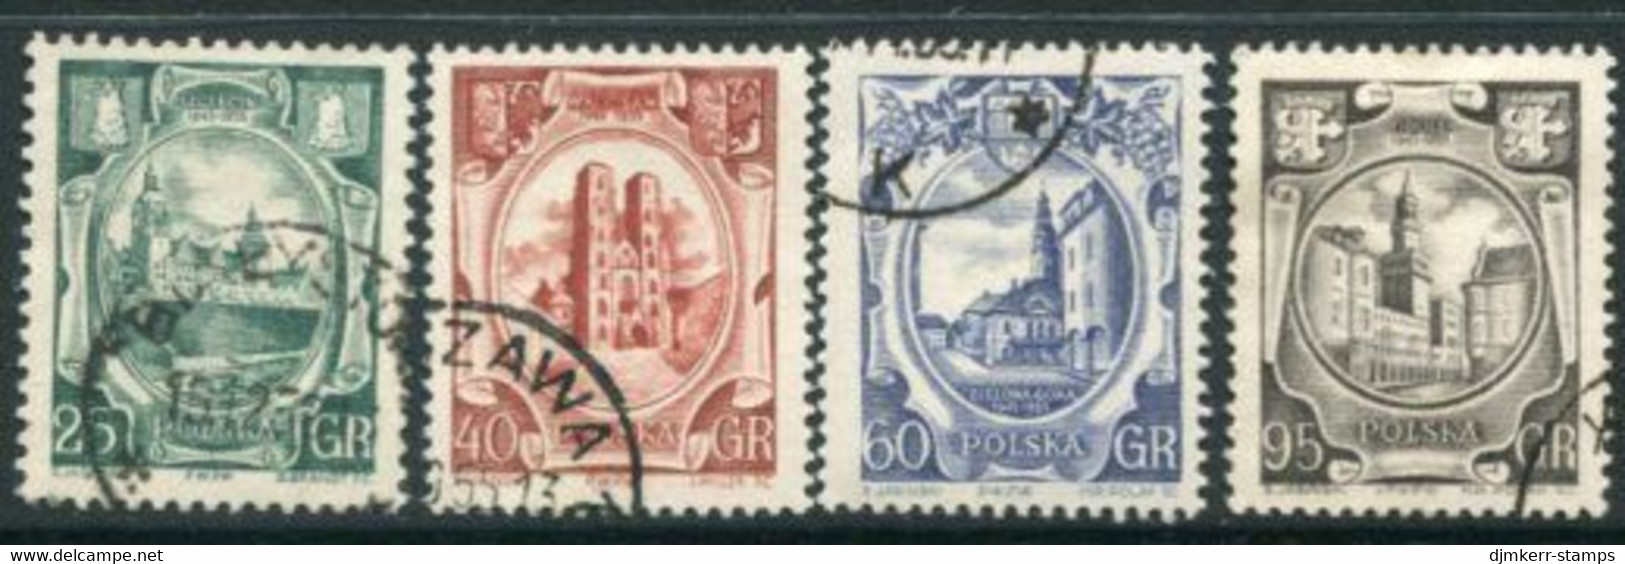 POLAND 1955 Incorporation Of Western Territories Used  Michel 942-45 - Gebruikt